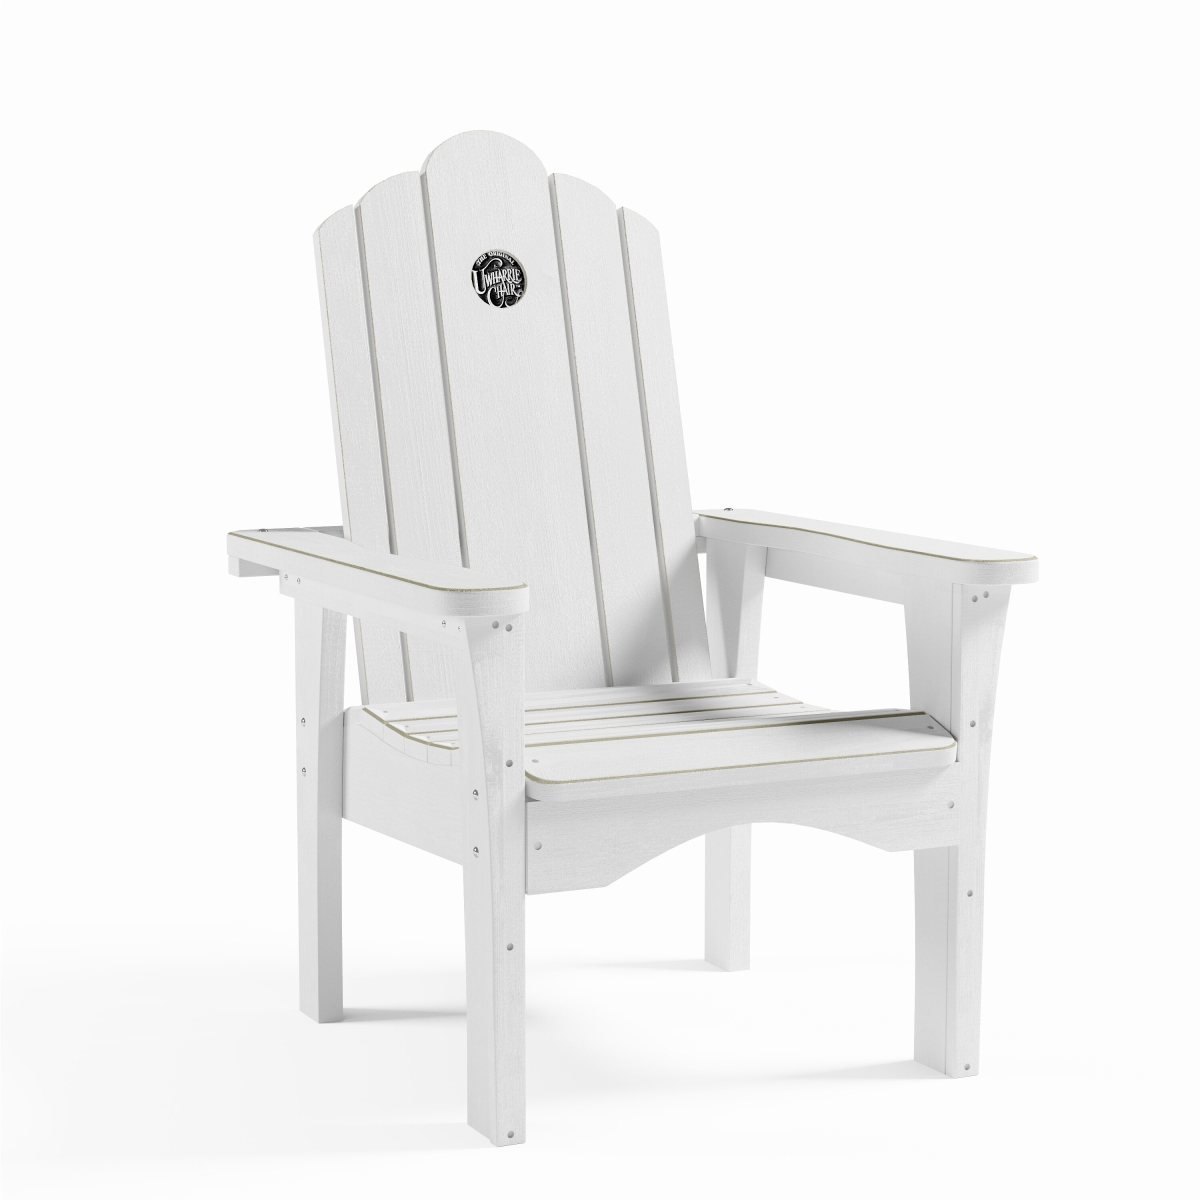 S114-075 Original Wood Lounge Chair, Golden Mustard Pine - 30.5 X 33.5 X 43.5 In.